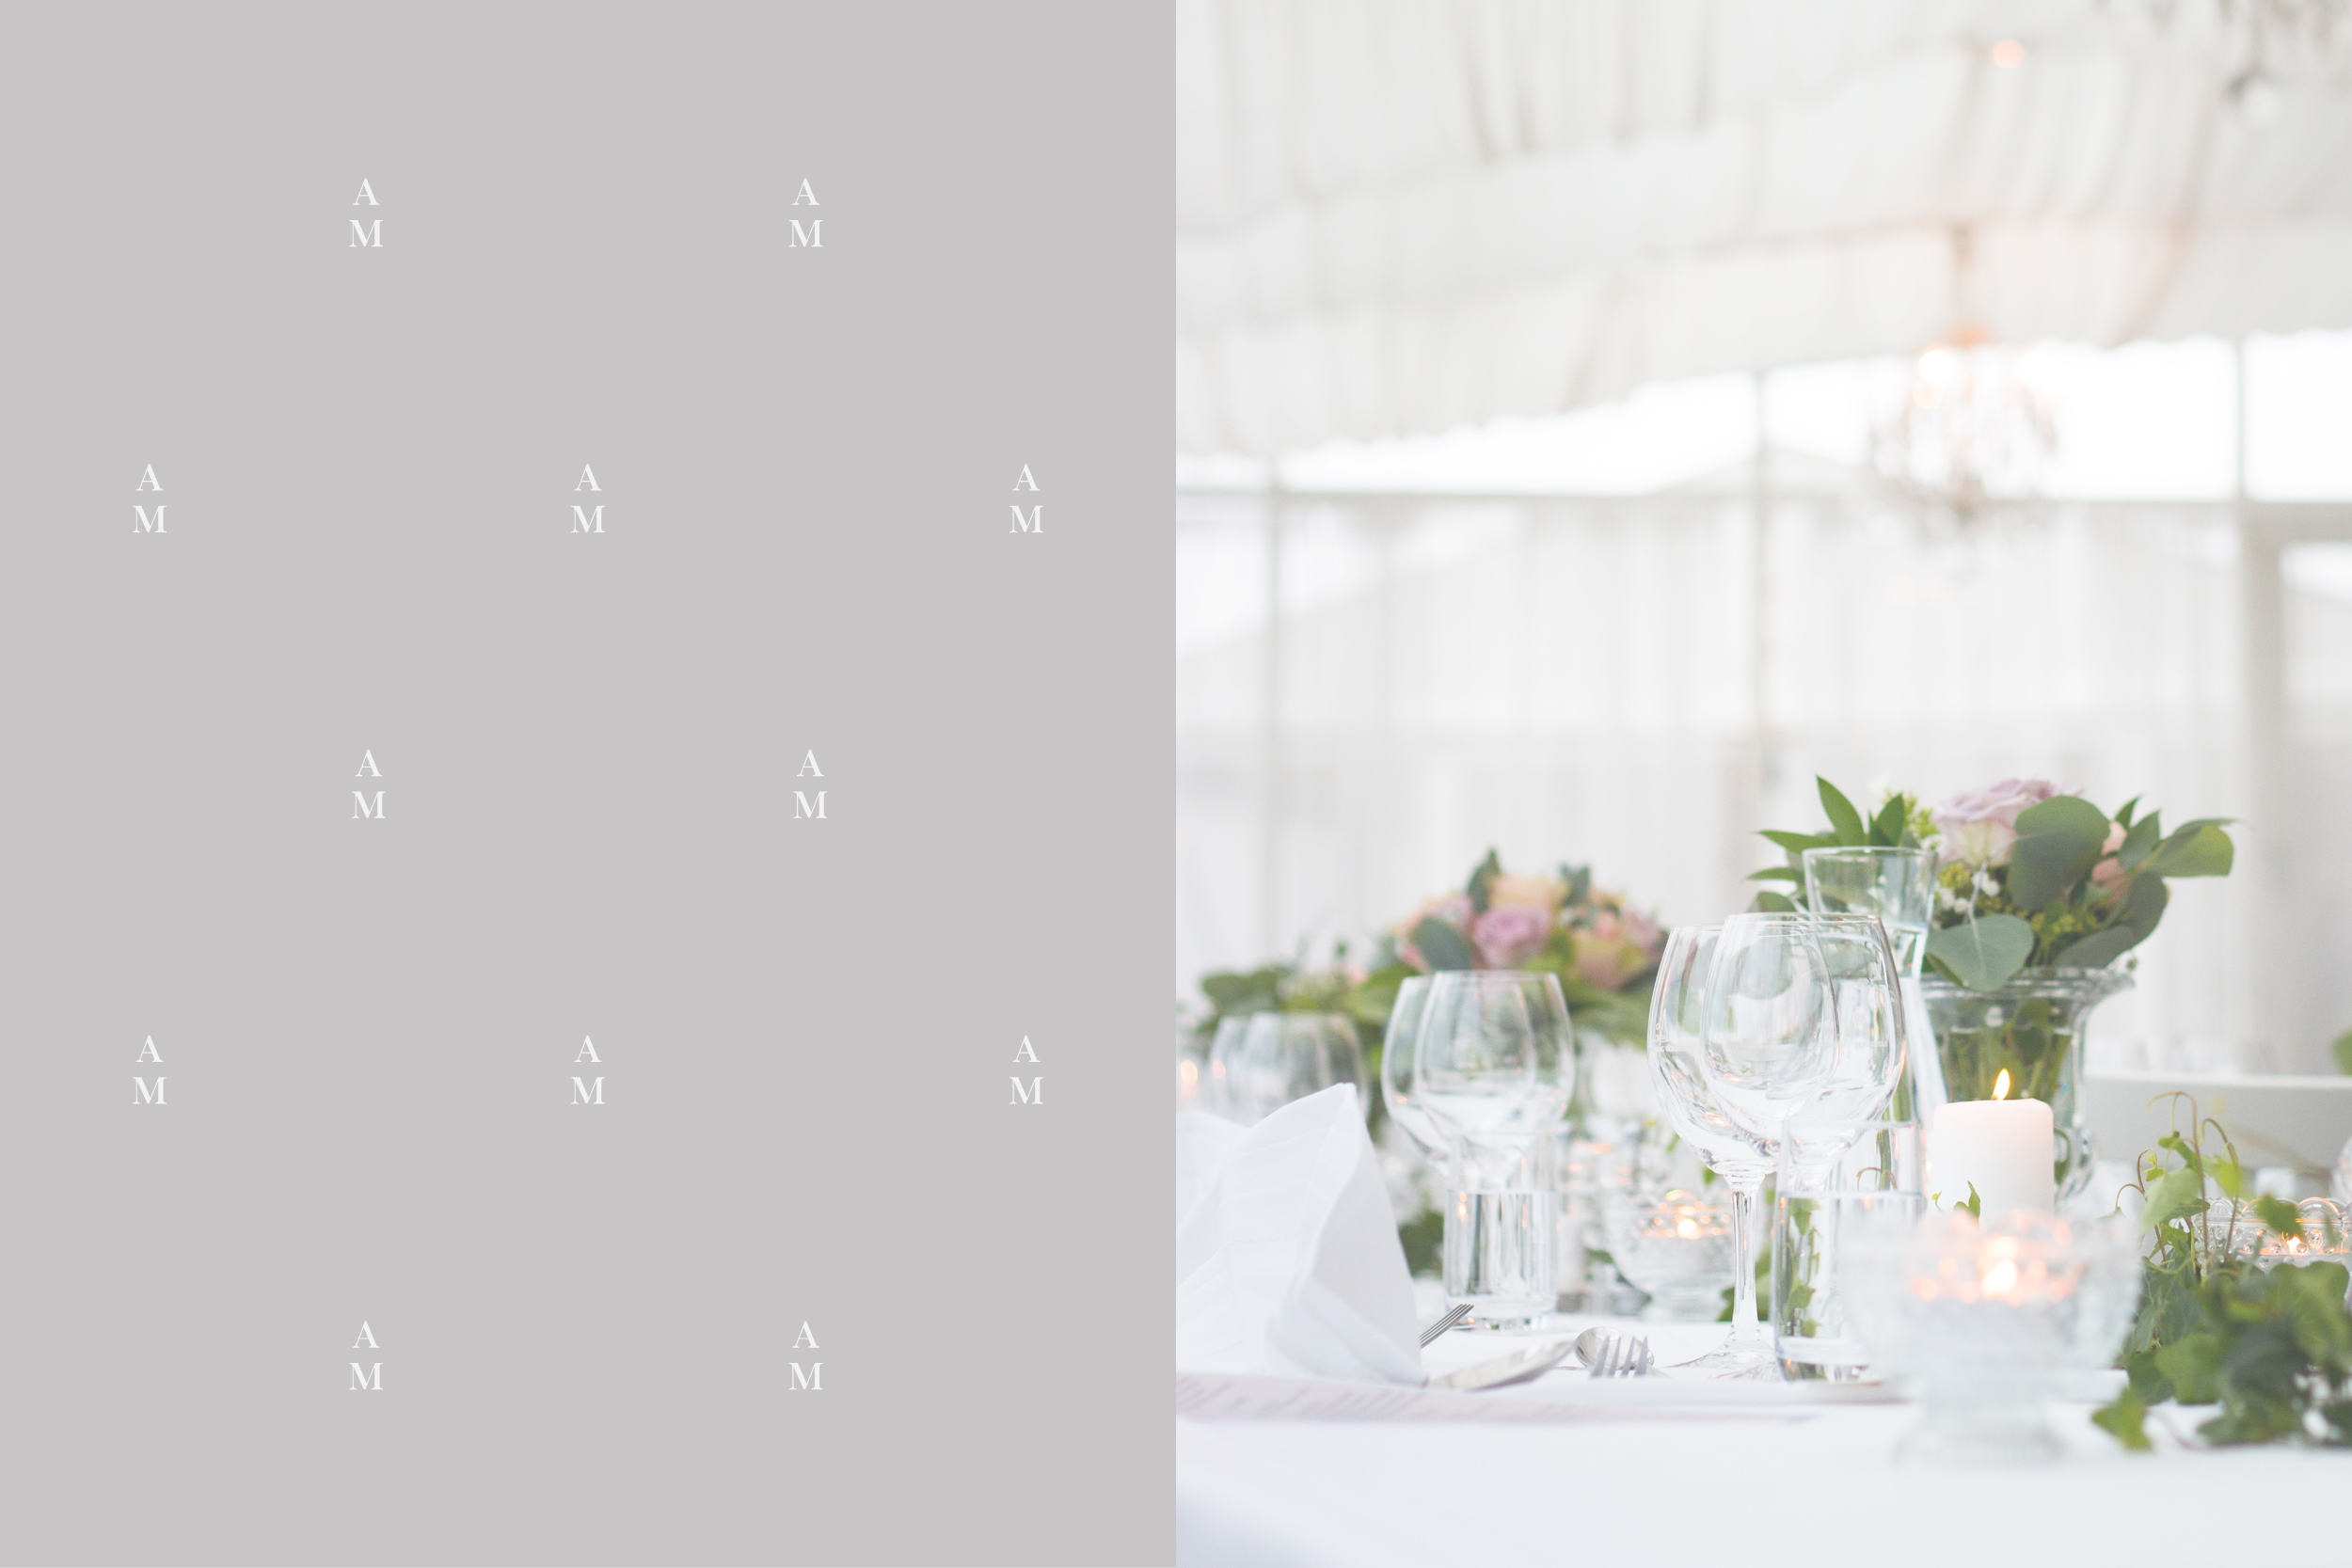 Wedding Planner Logo Design + Branding // Sarah Ann Design